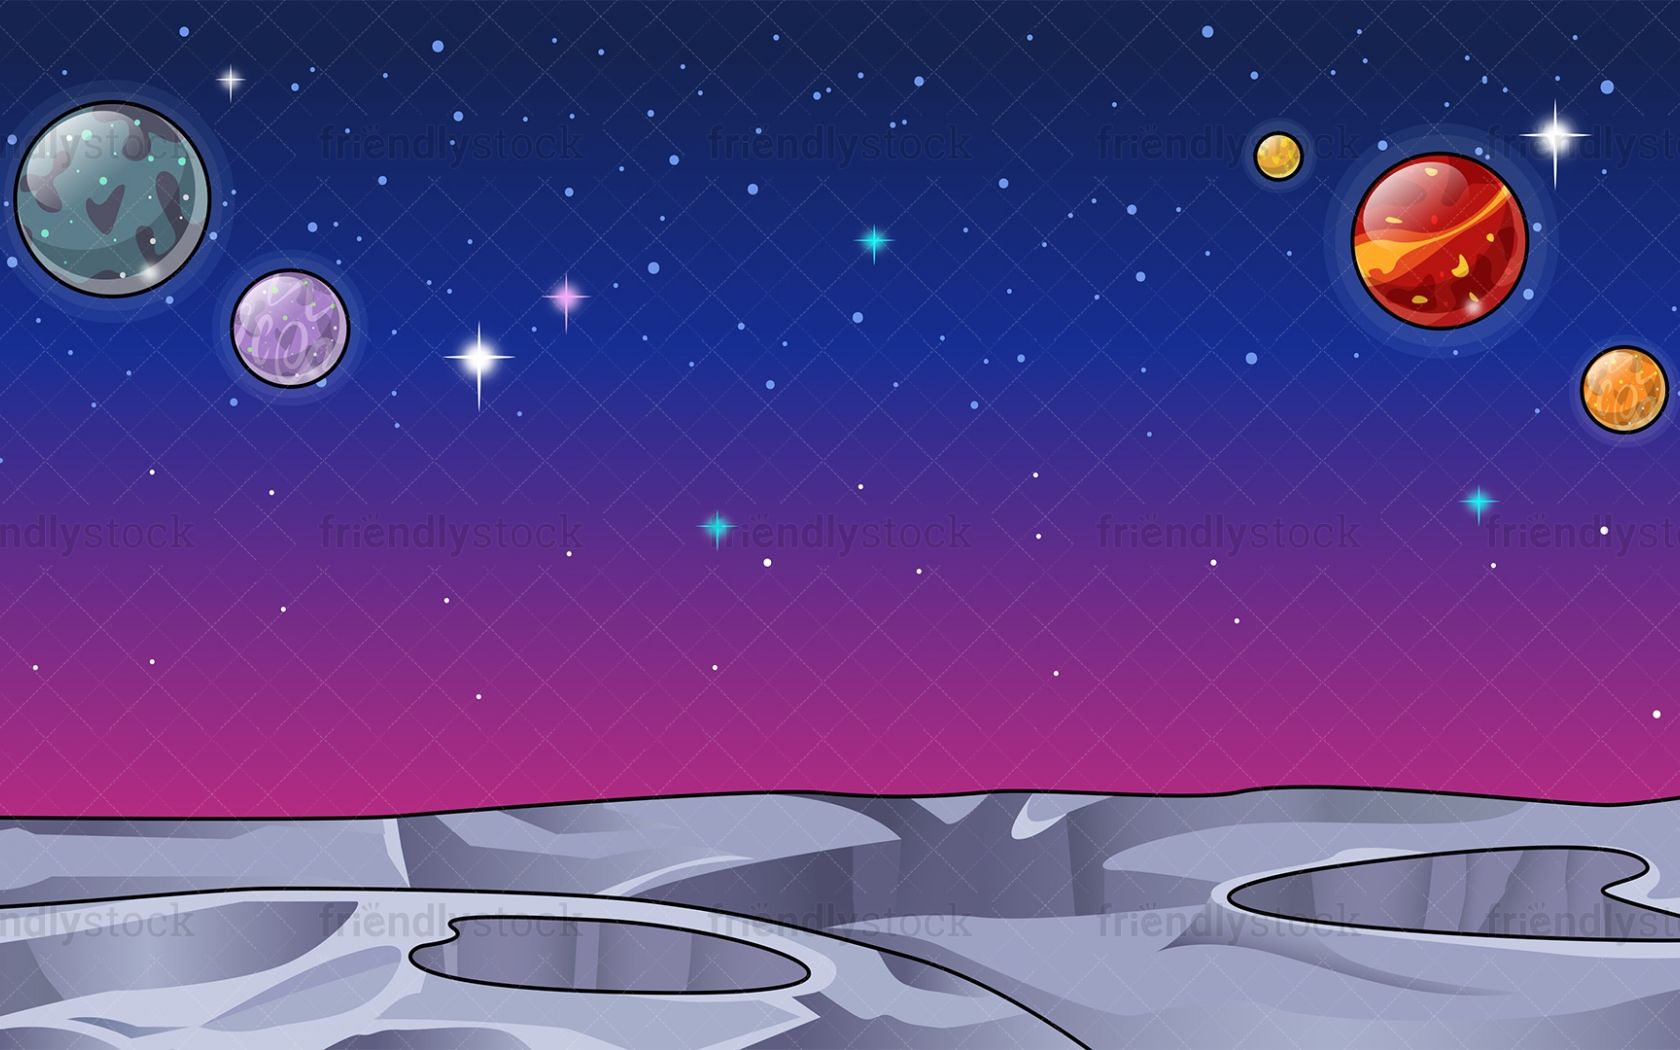 Free download Barren Alien World Space Backgrounds Cartoon Clipart.